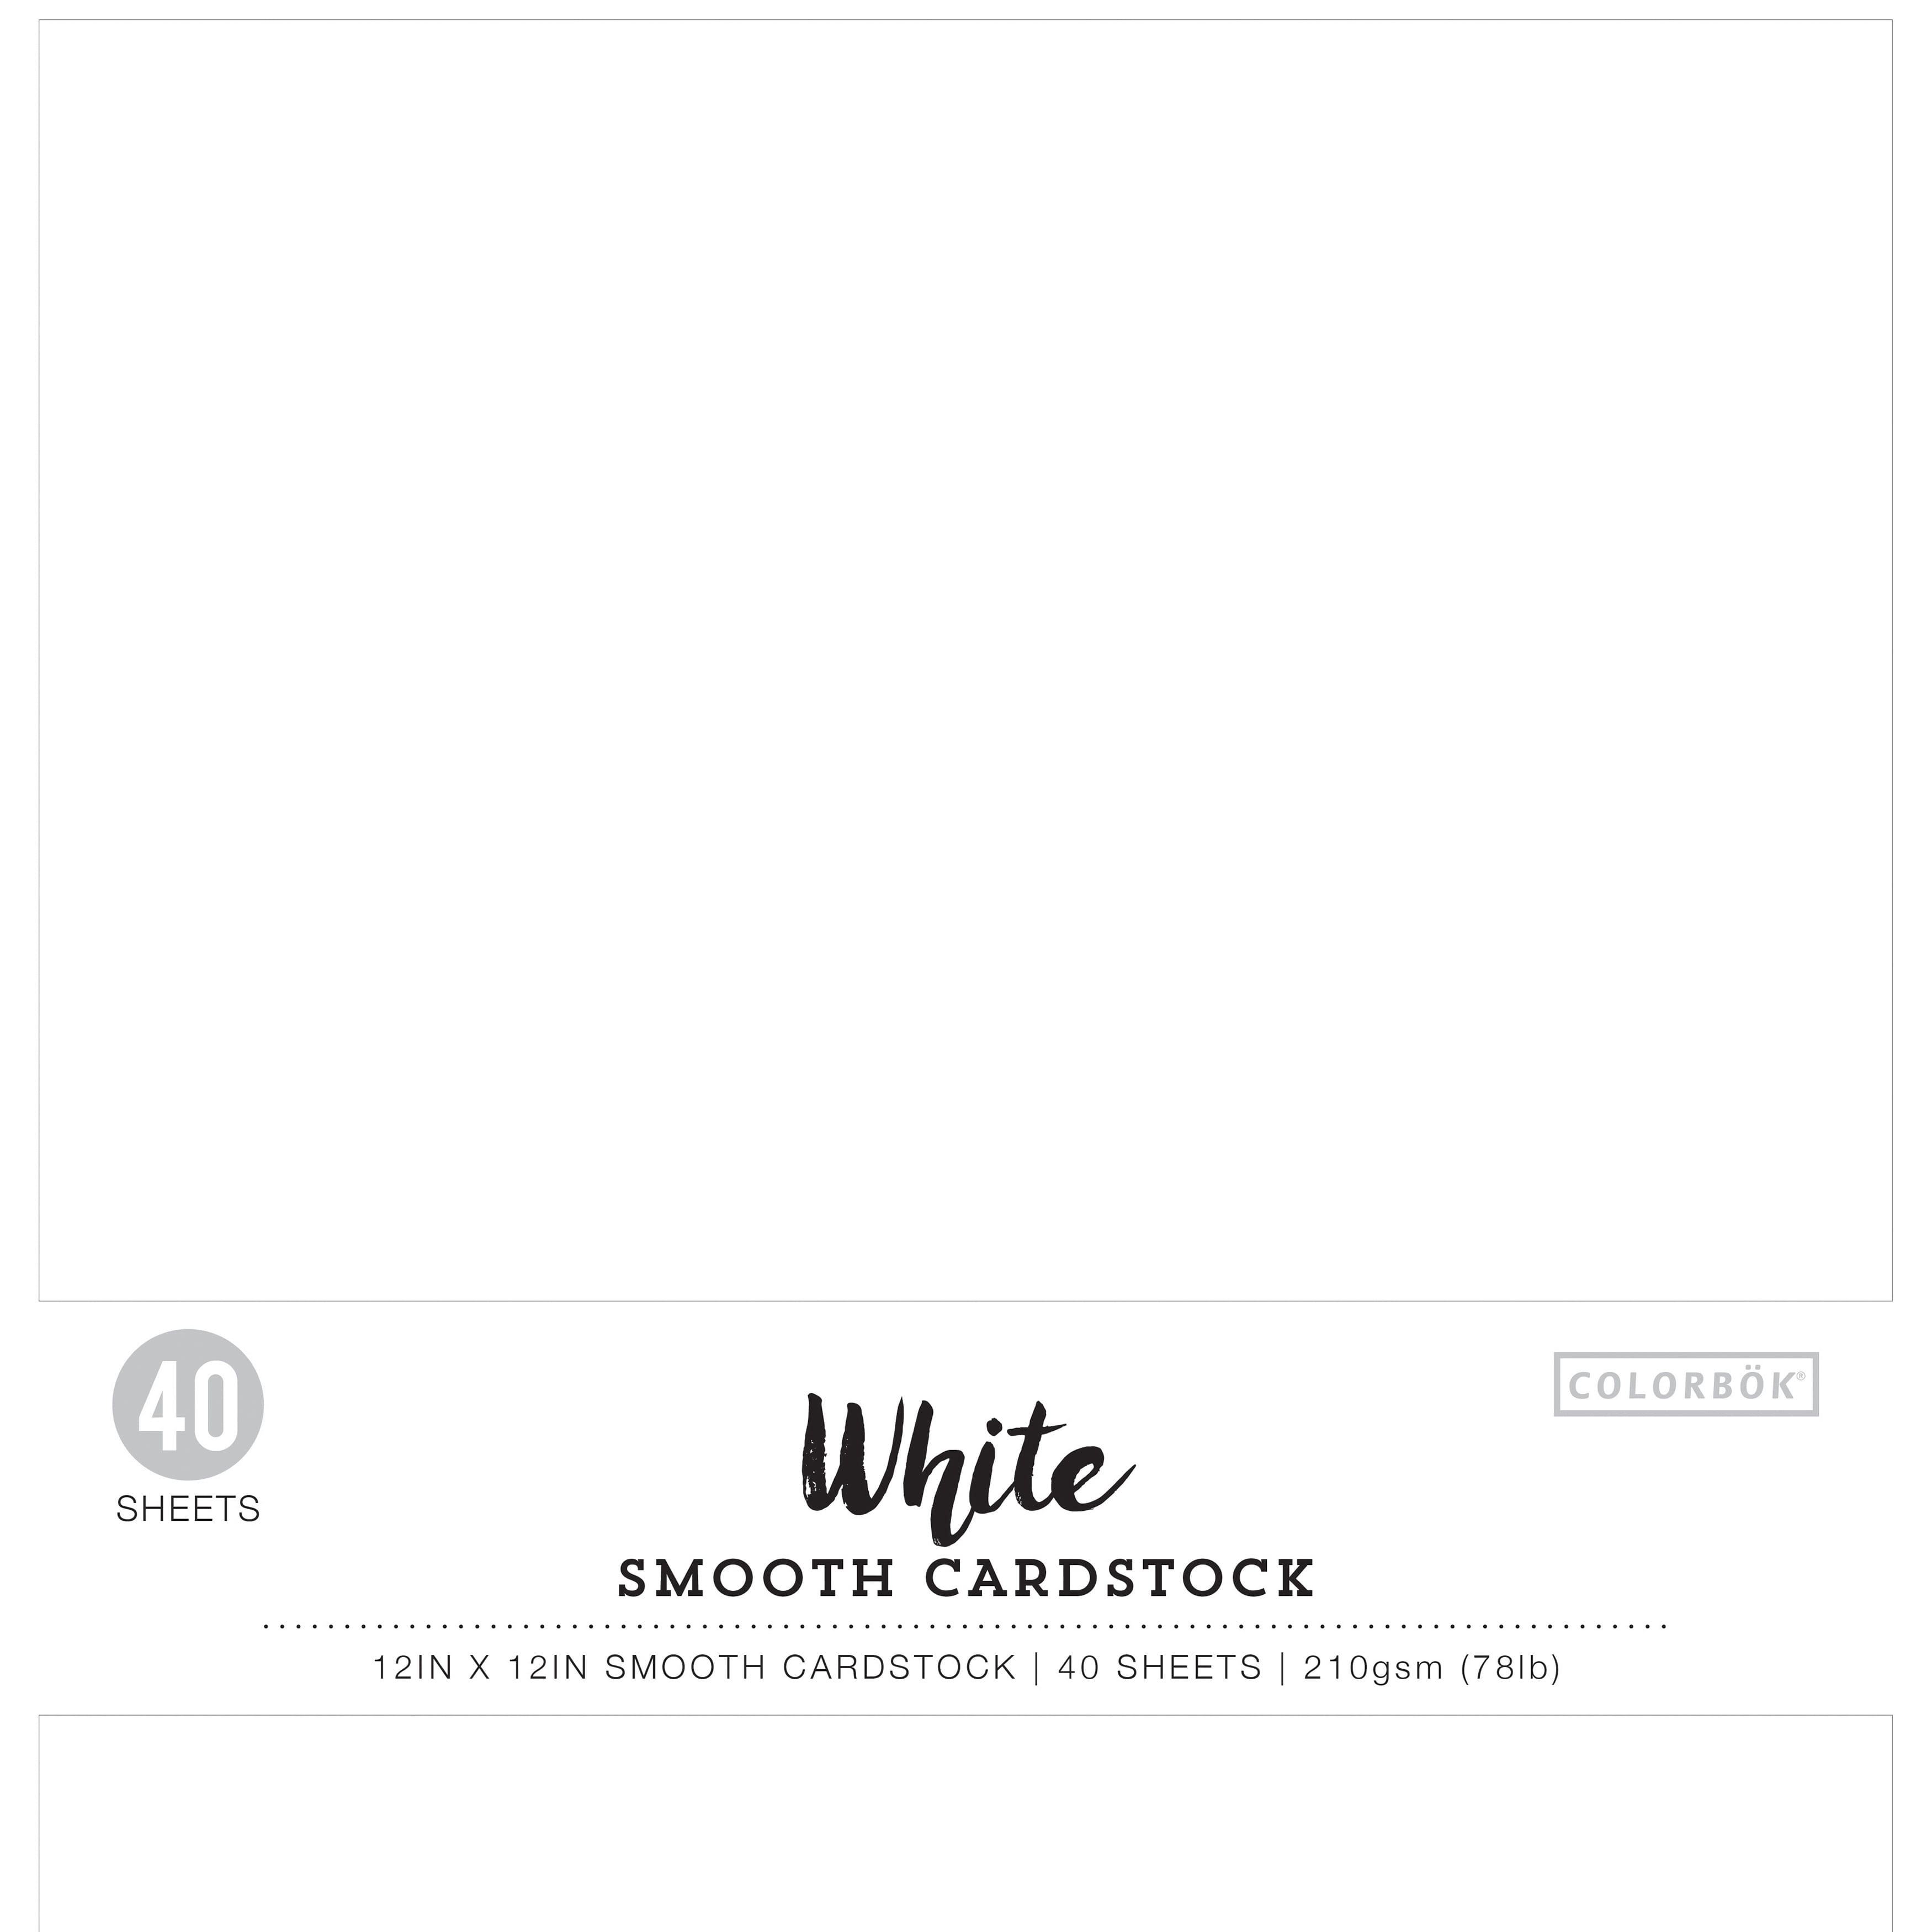 Colorbok 78lb Smooth Cardstock 12x12 40 Pkg White